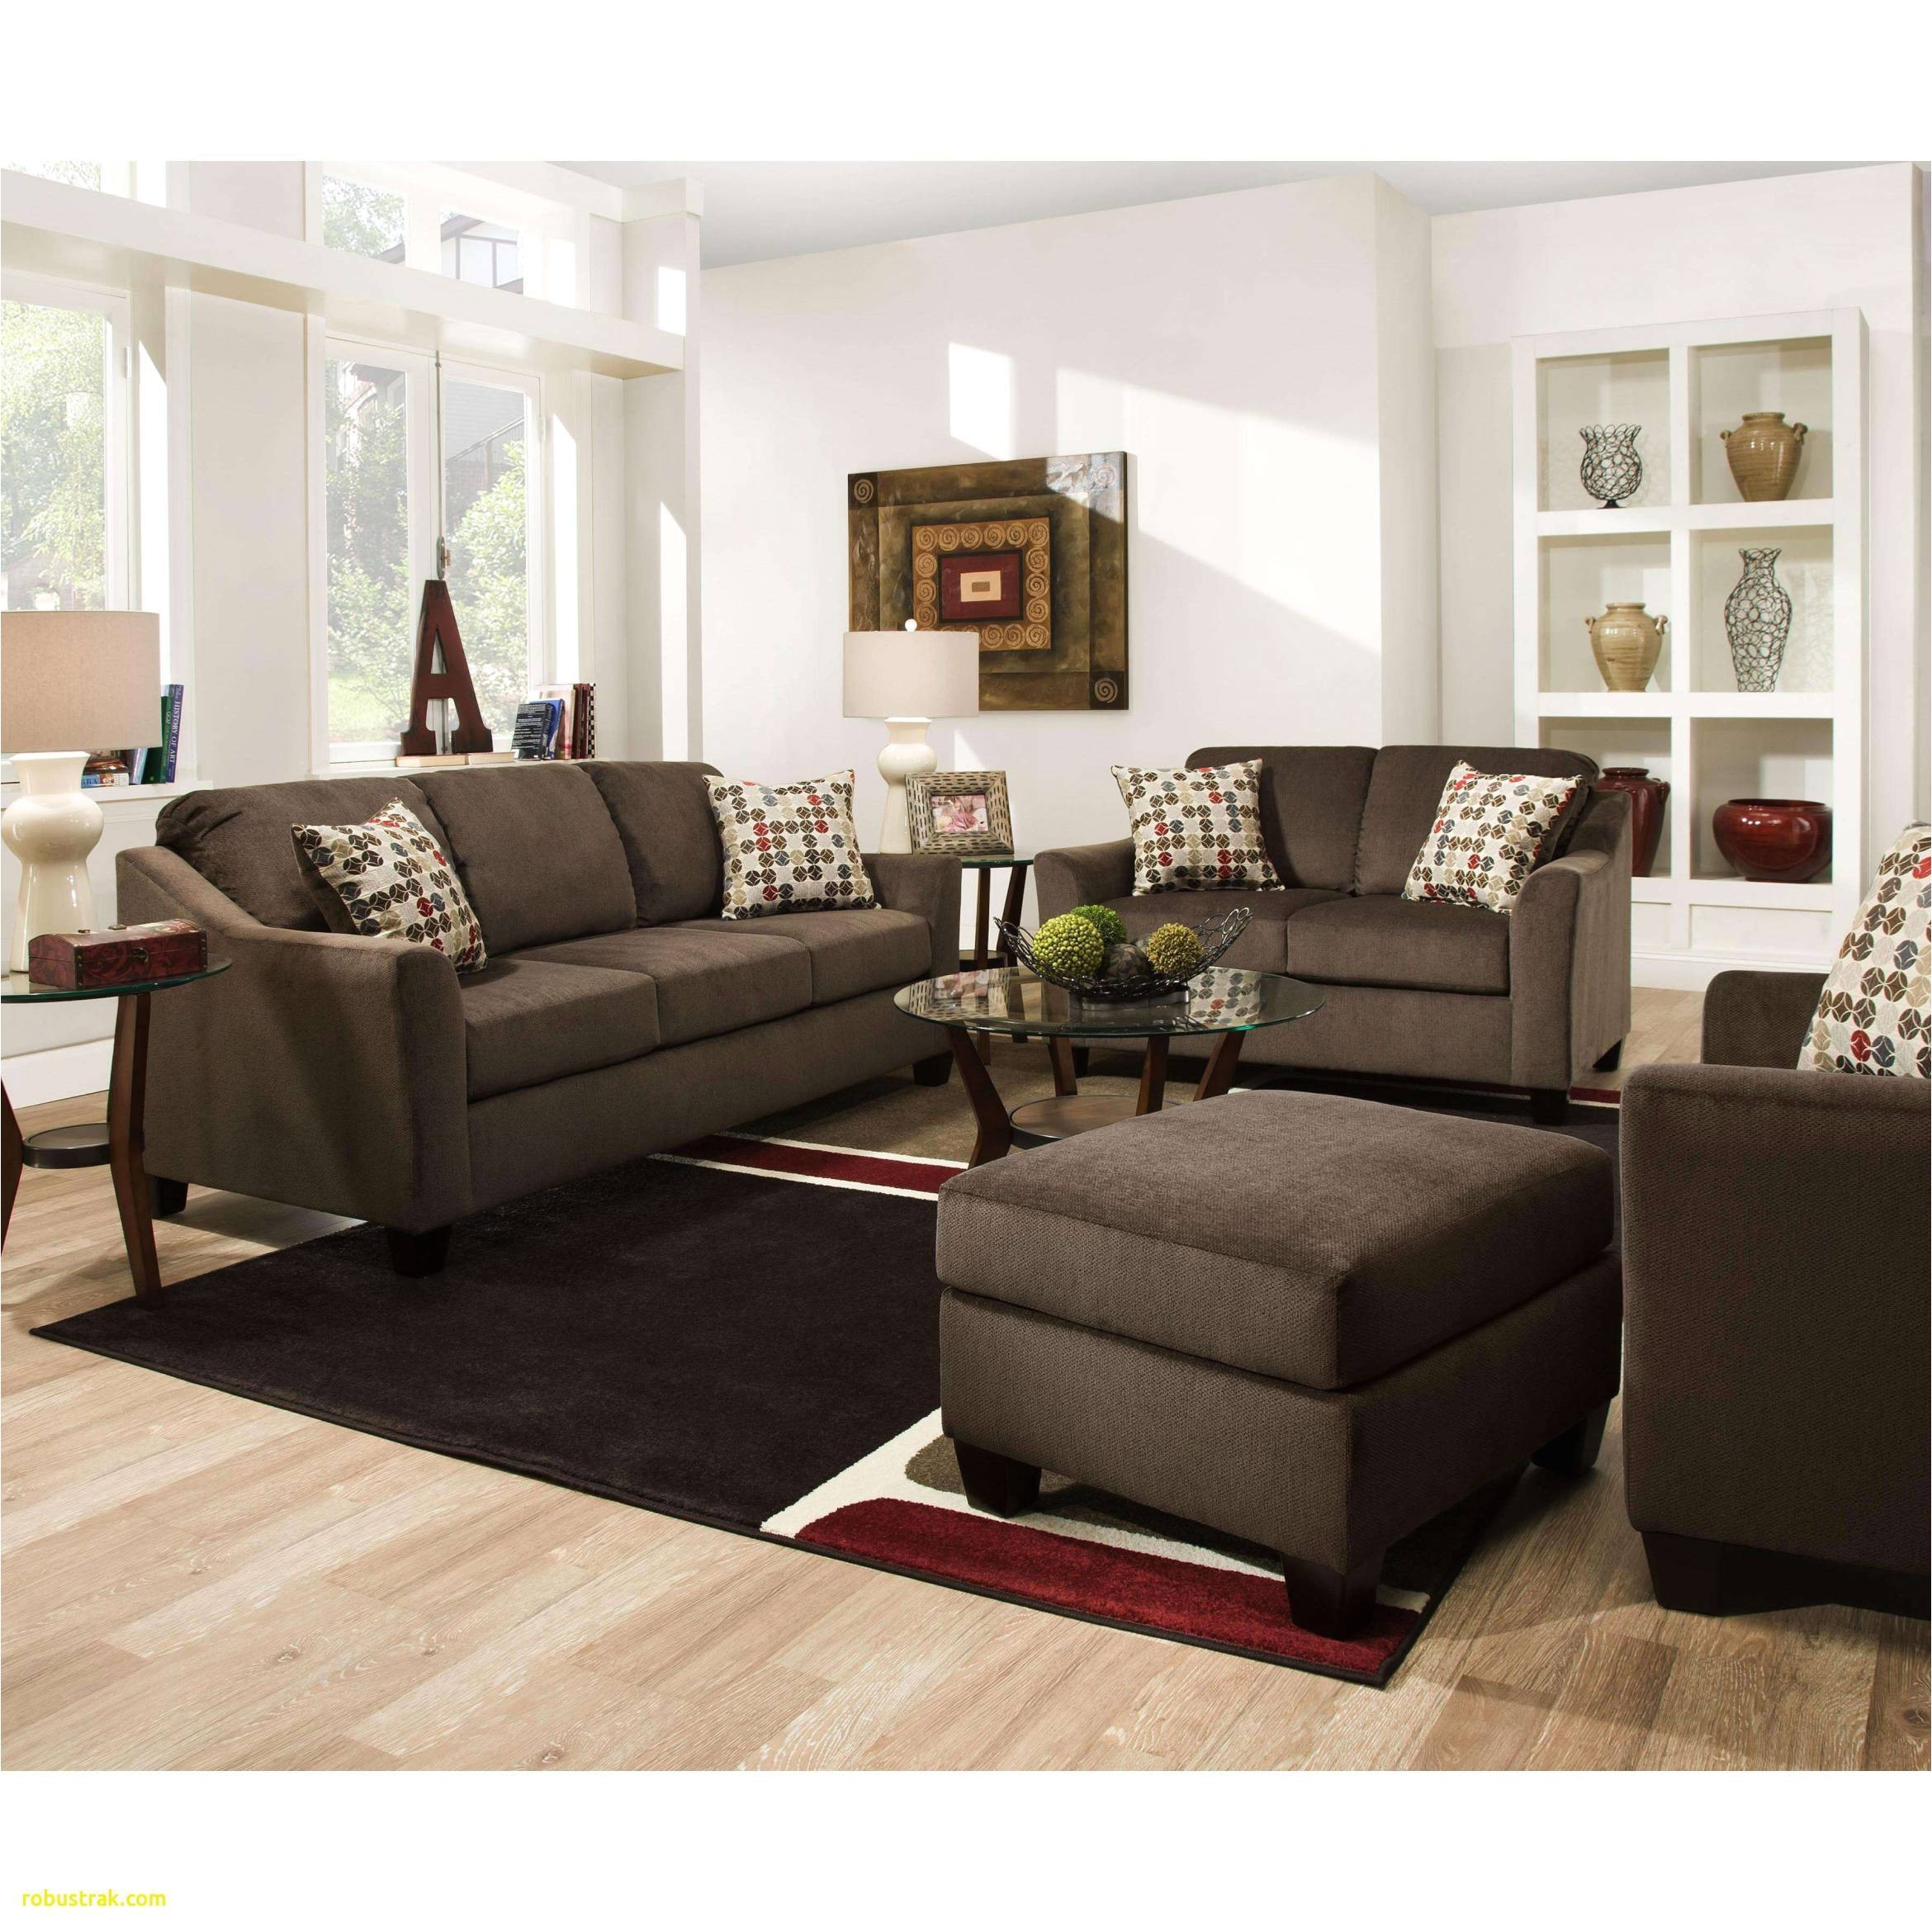 Midcentury Modern Dining Room Inspirational Mid Century Design Best Century sofa 0d Archives Living Room Ideas